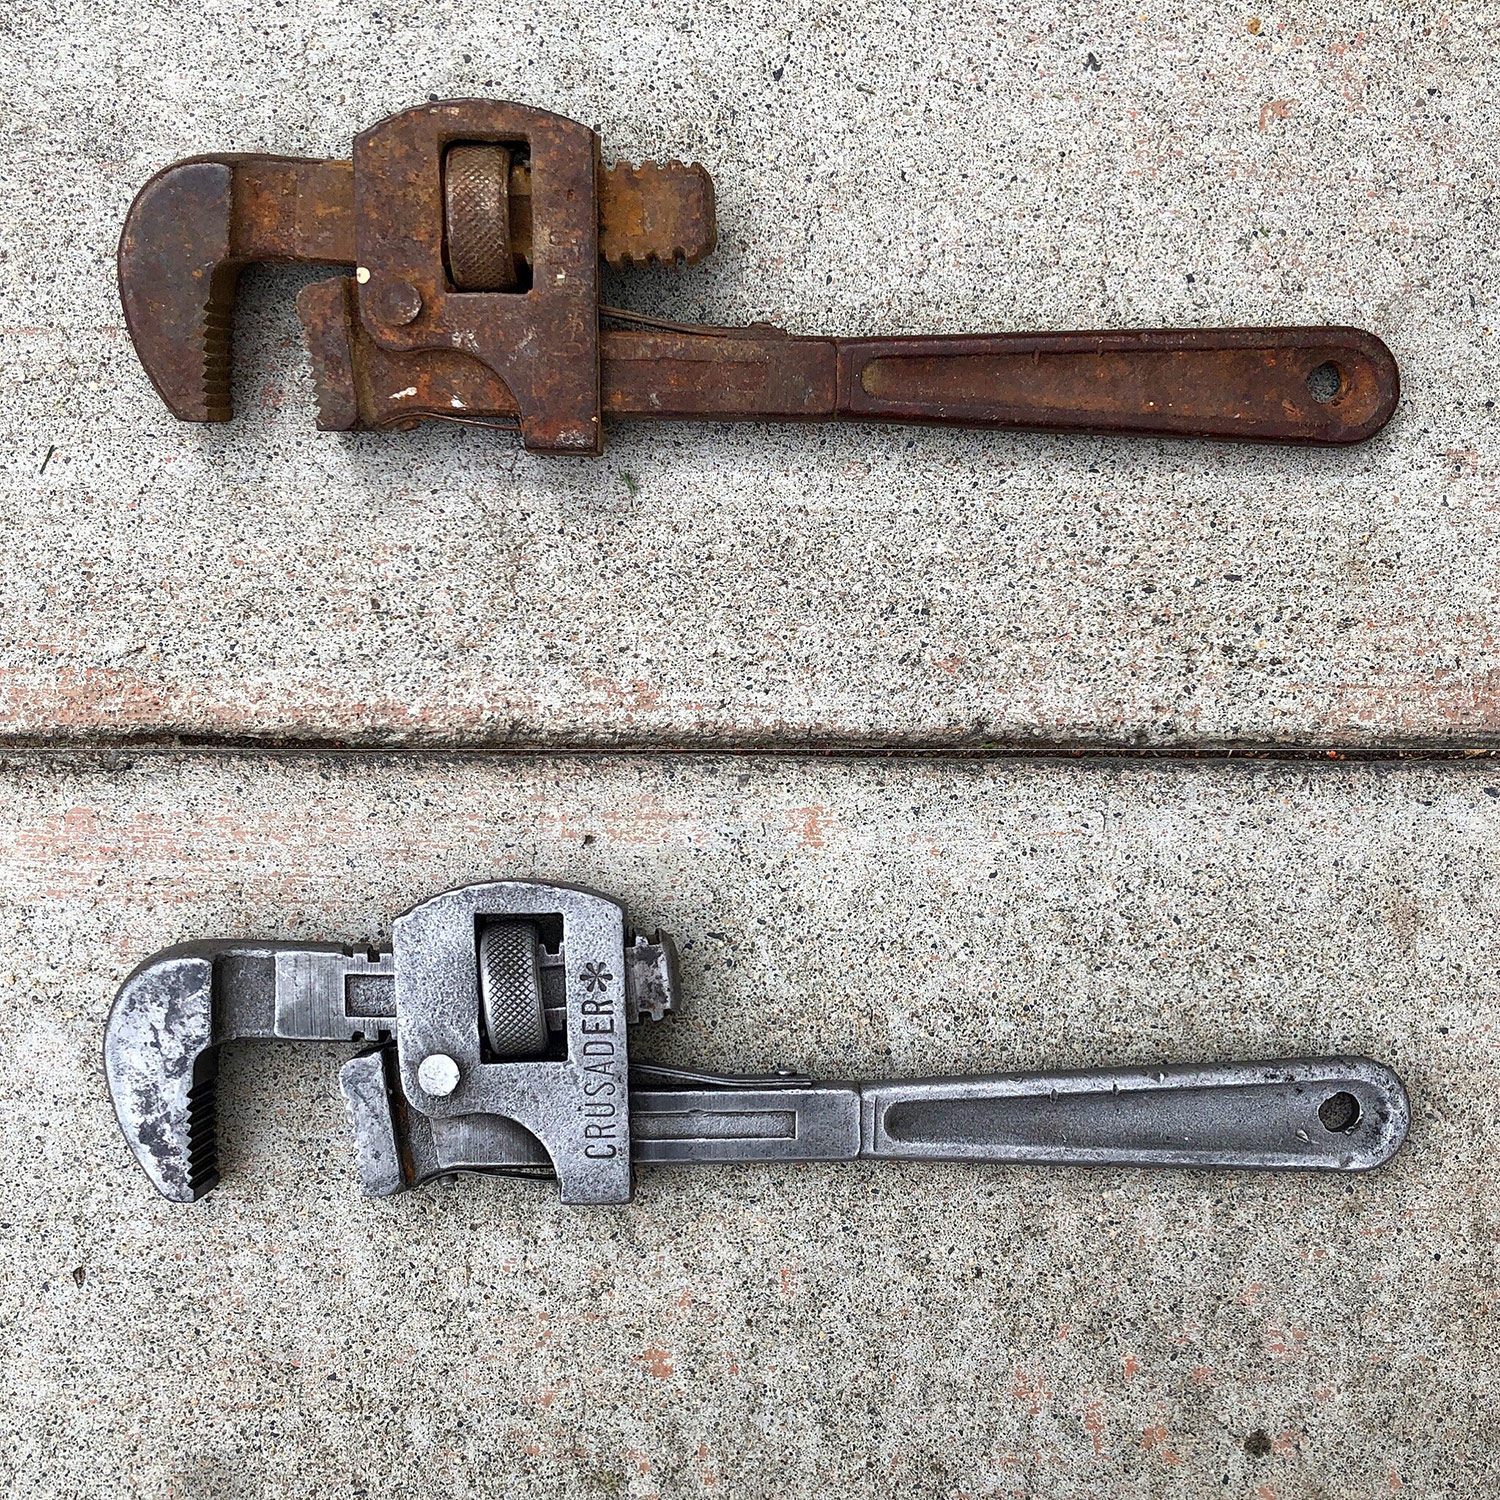 Stillson wrench restoration